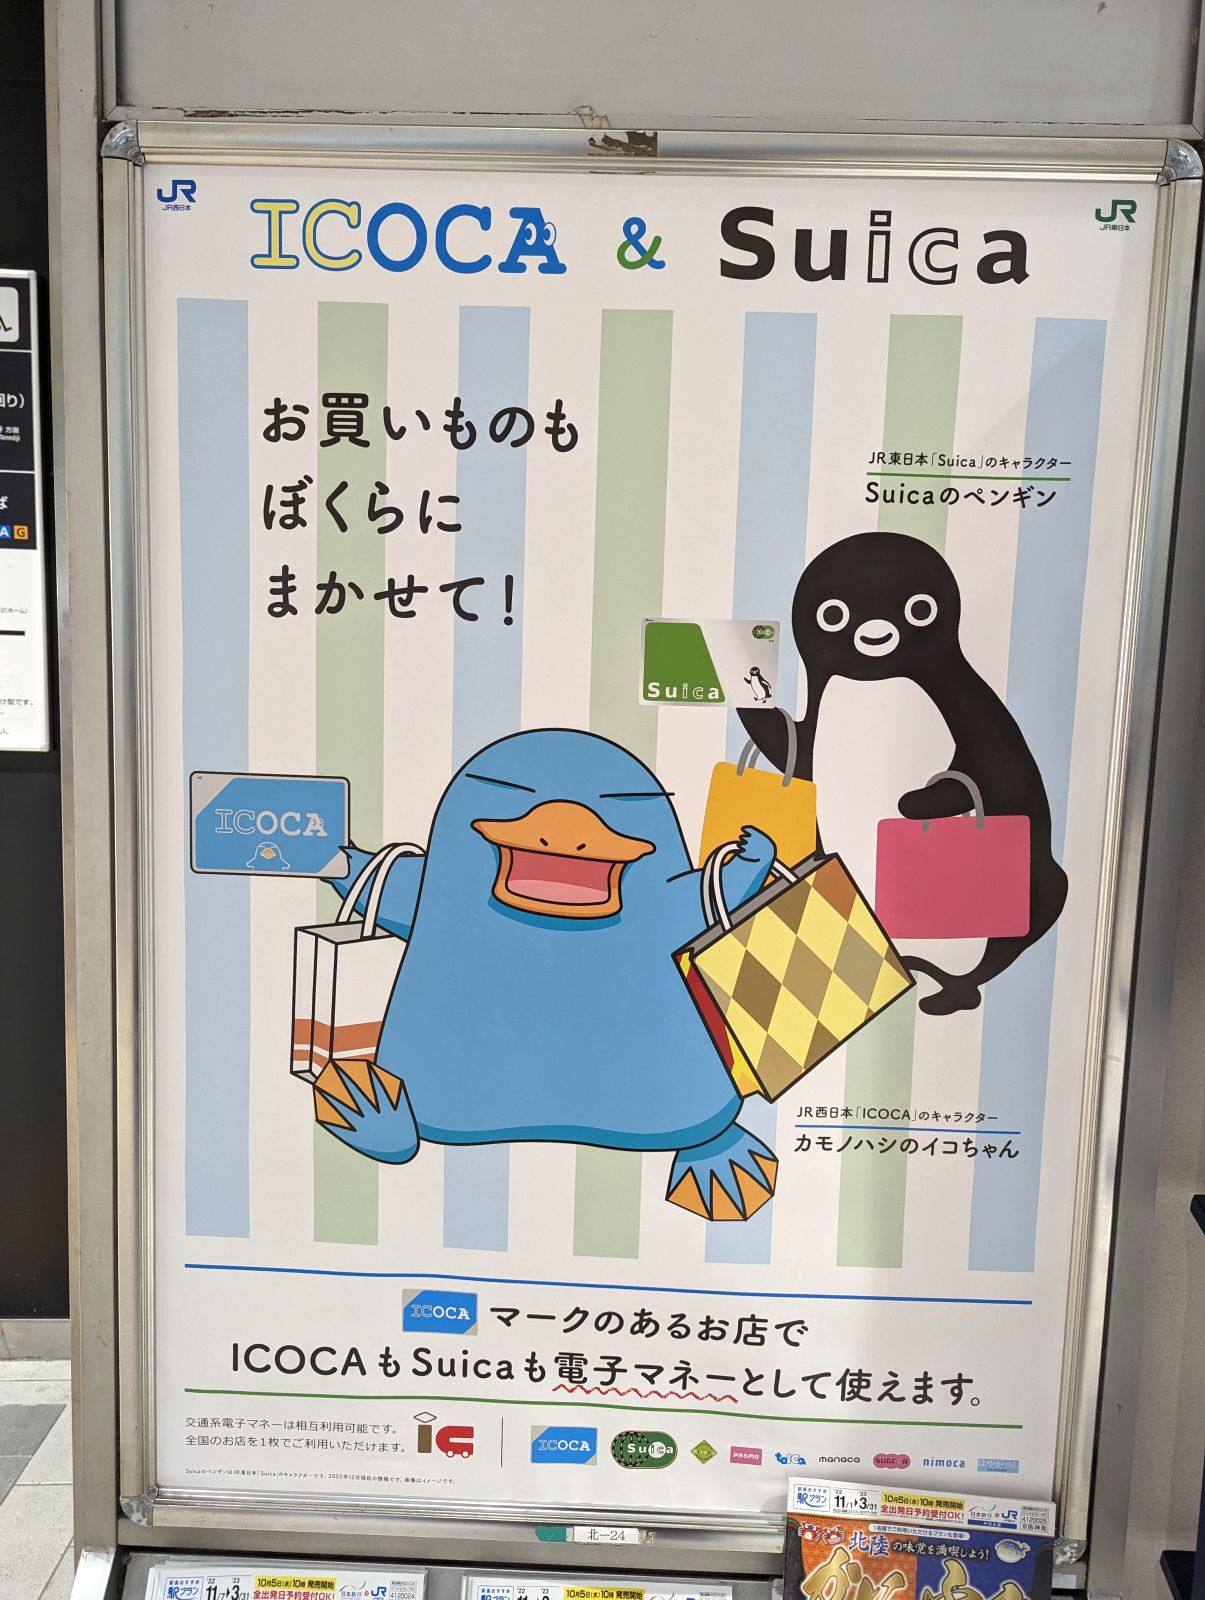 ICOCA & Suica